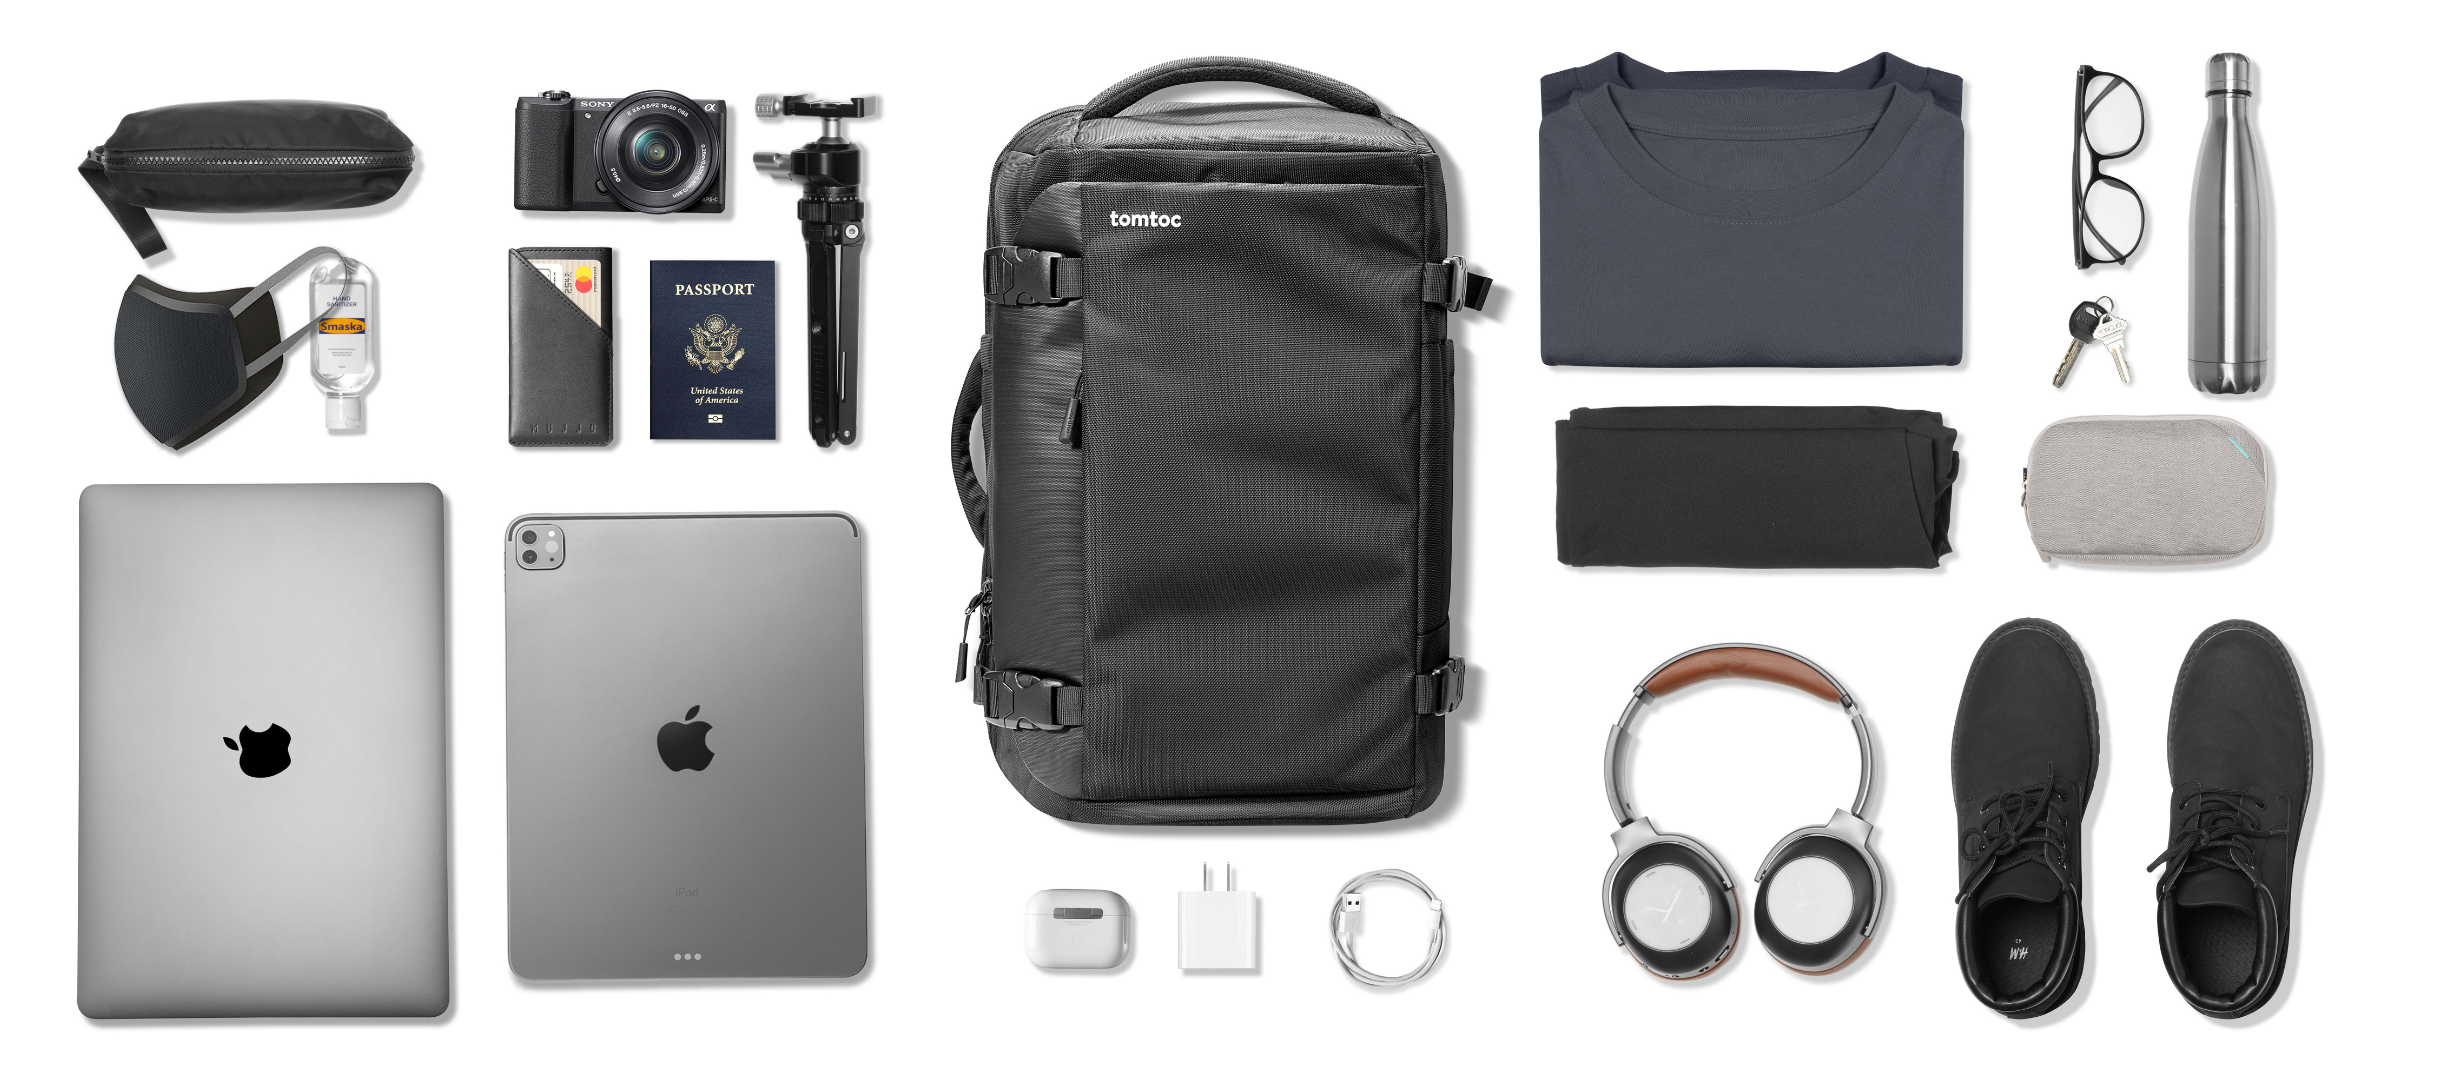 tomtoc Navigator - T66 Travel Laptop Backpack